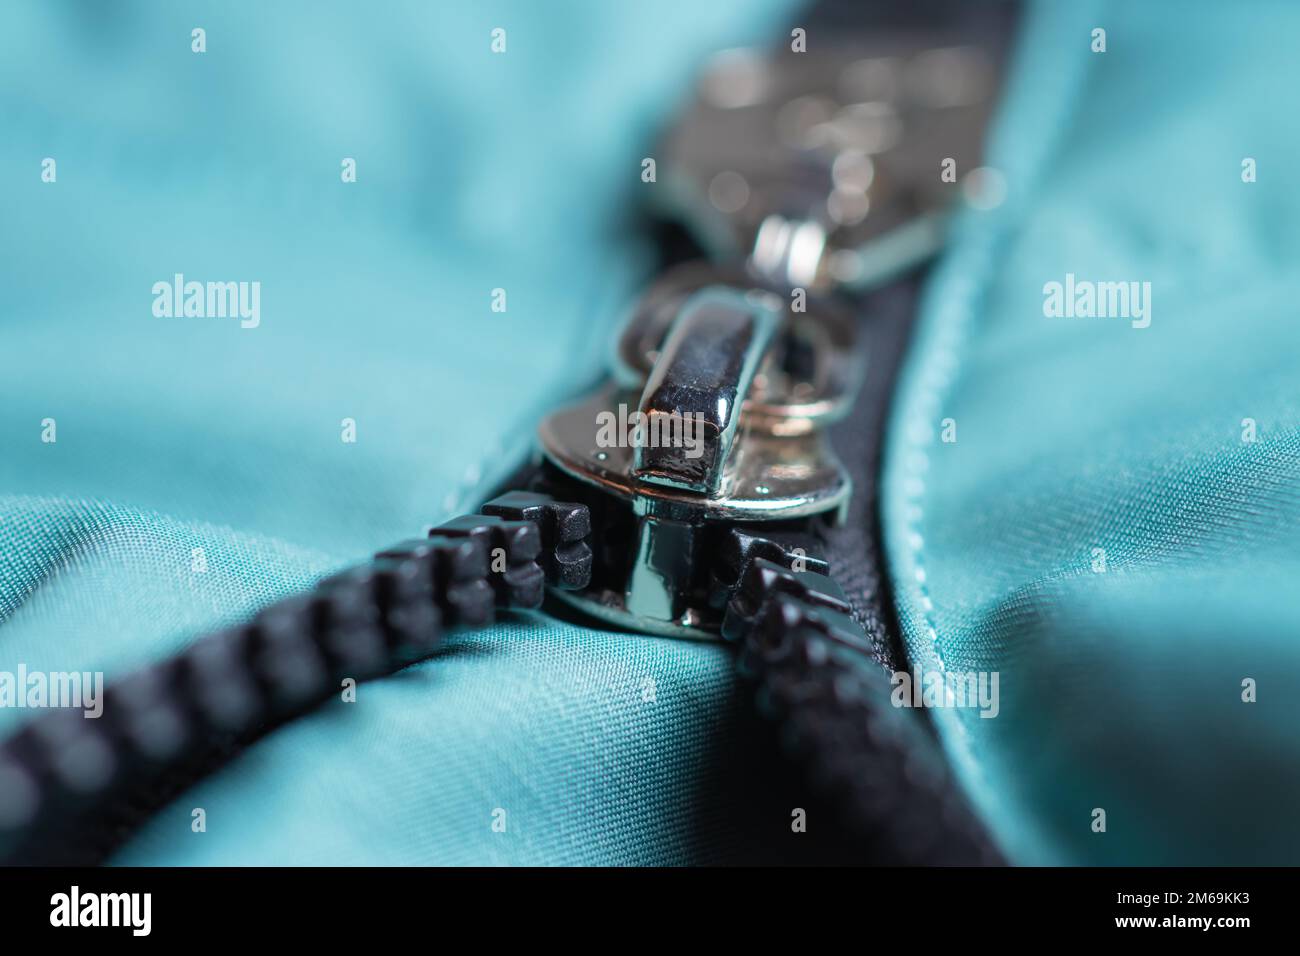 Iron zipper close up view, needlework concept Stock Photo